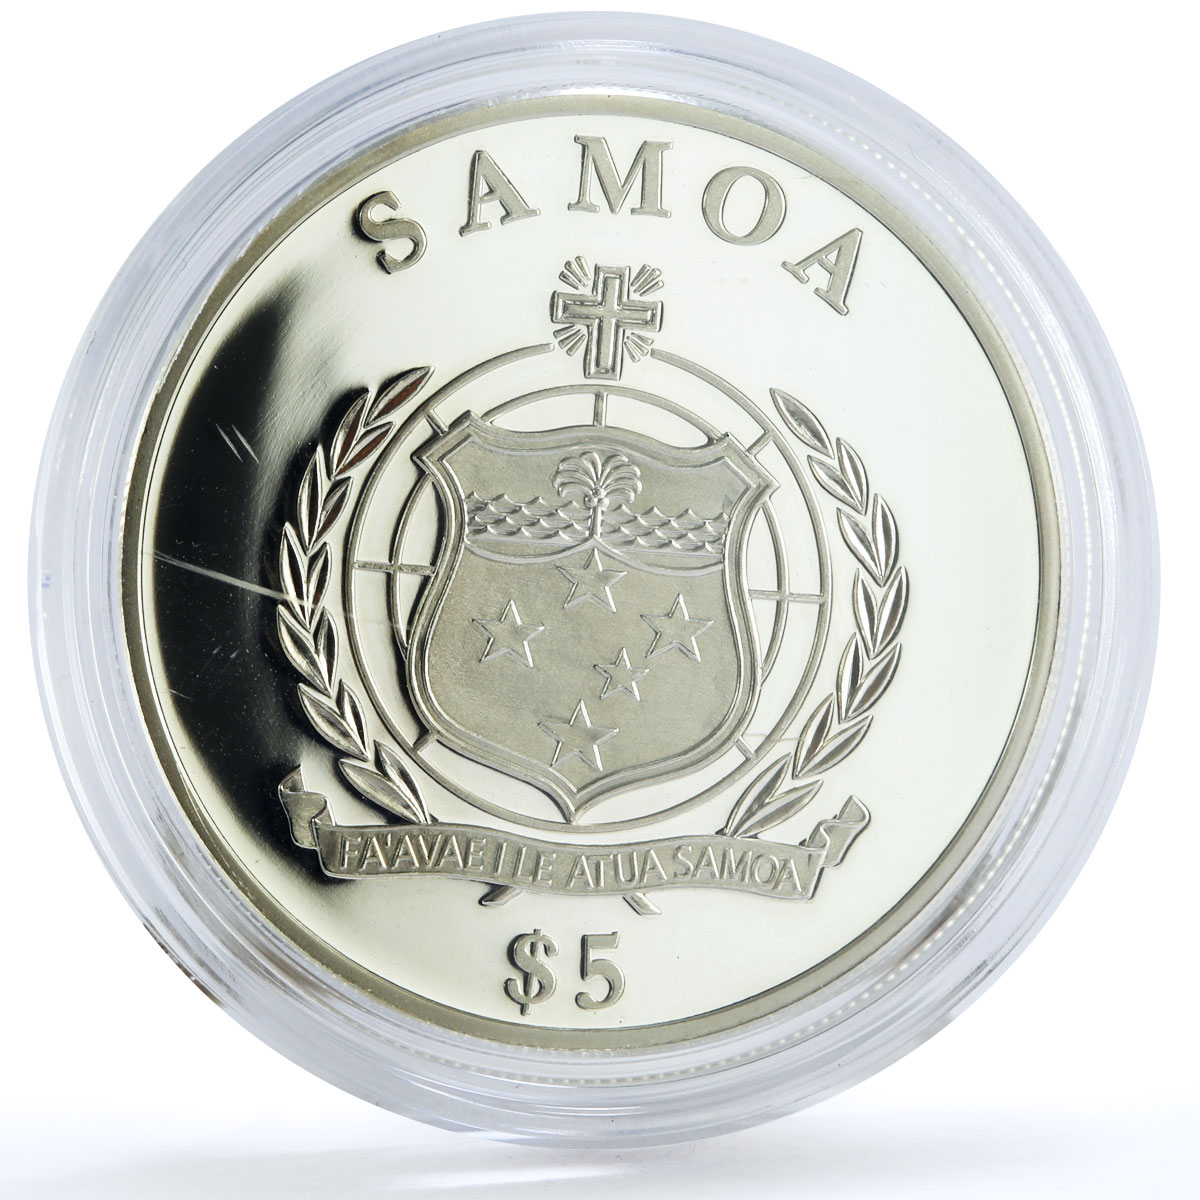 Samoa 5 dollars Trains Railways Railroads Saxonia Locomotive silver coin 2013